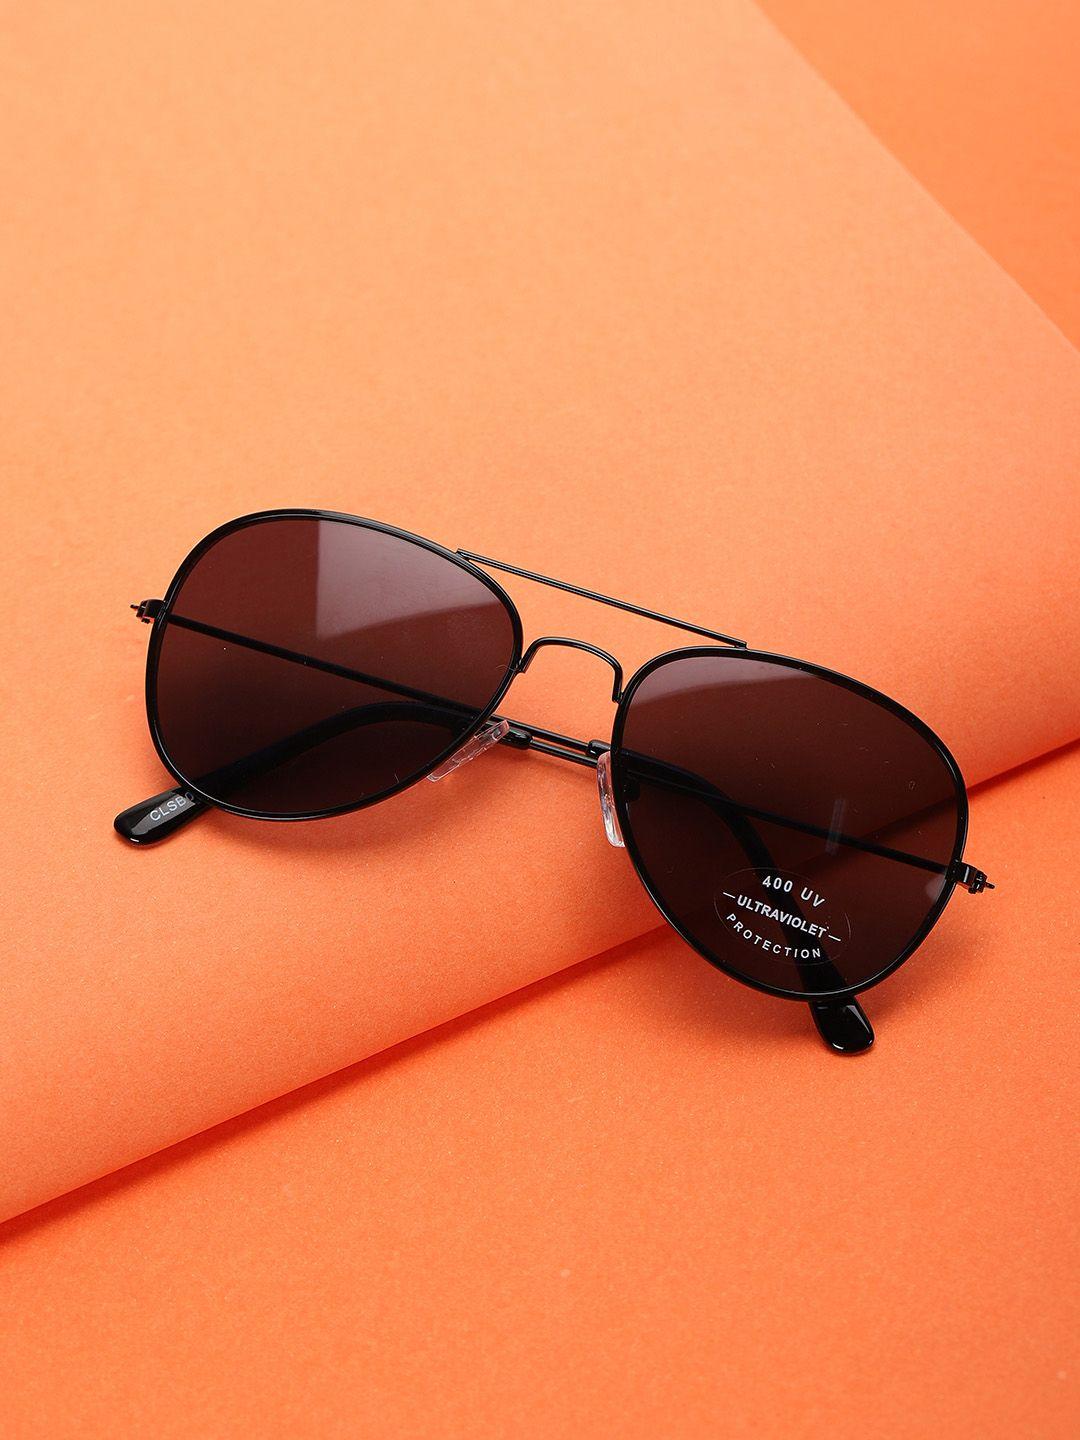 Carlton London Boys Black Lens & Black Aviator Sunglasses with UV Protected Lens